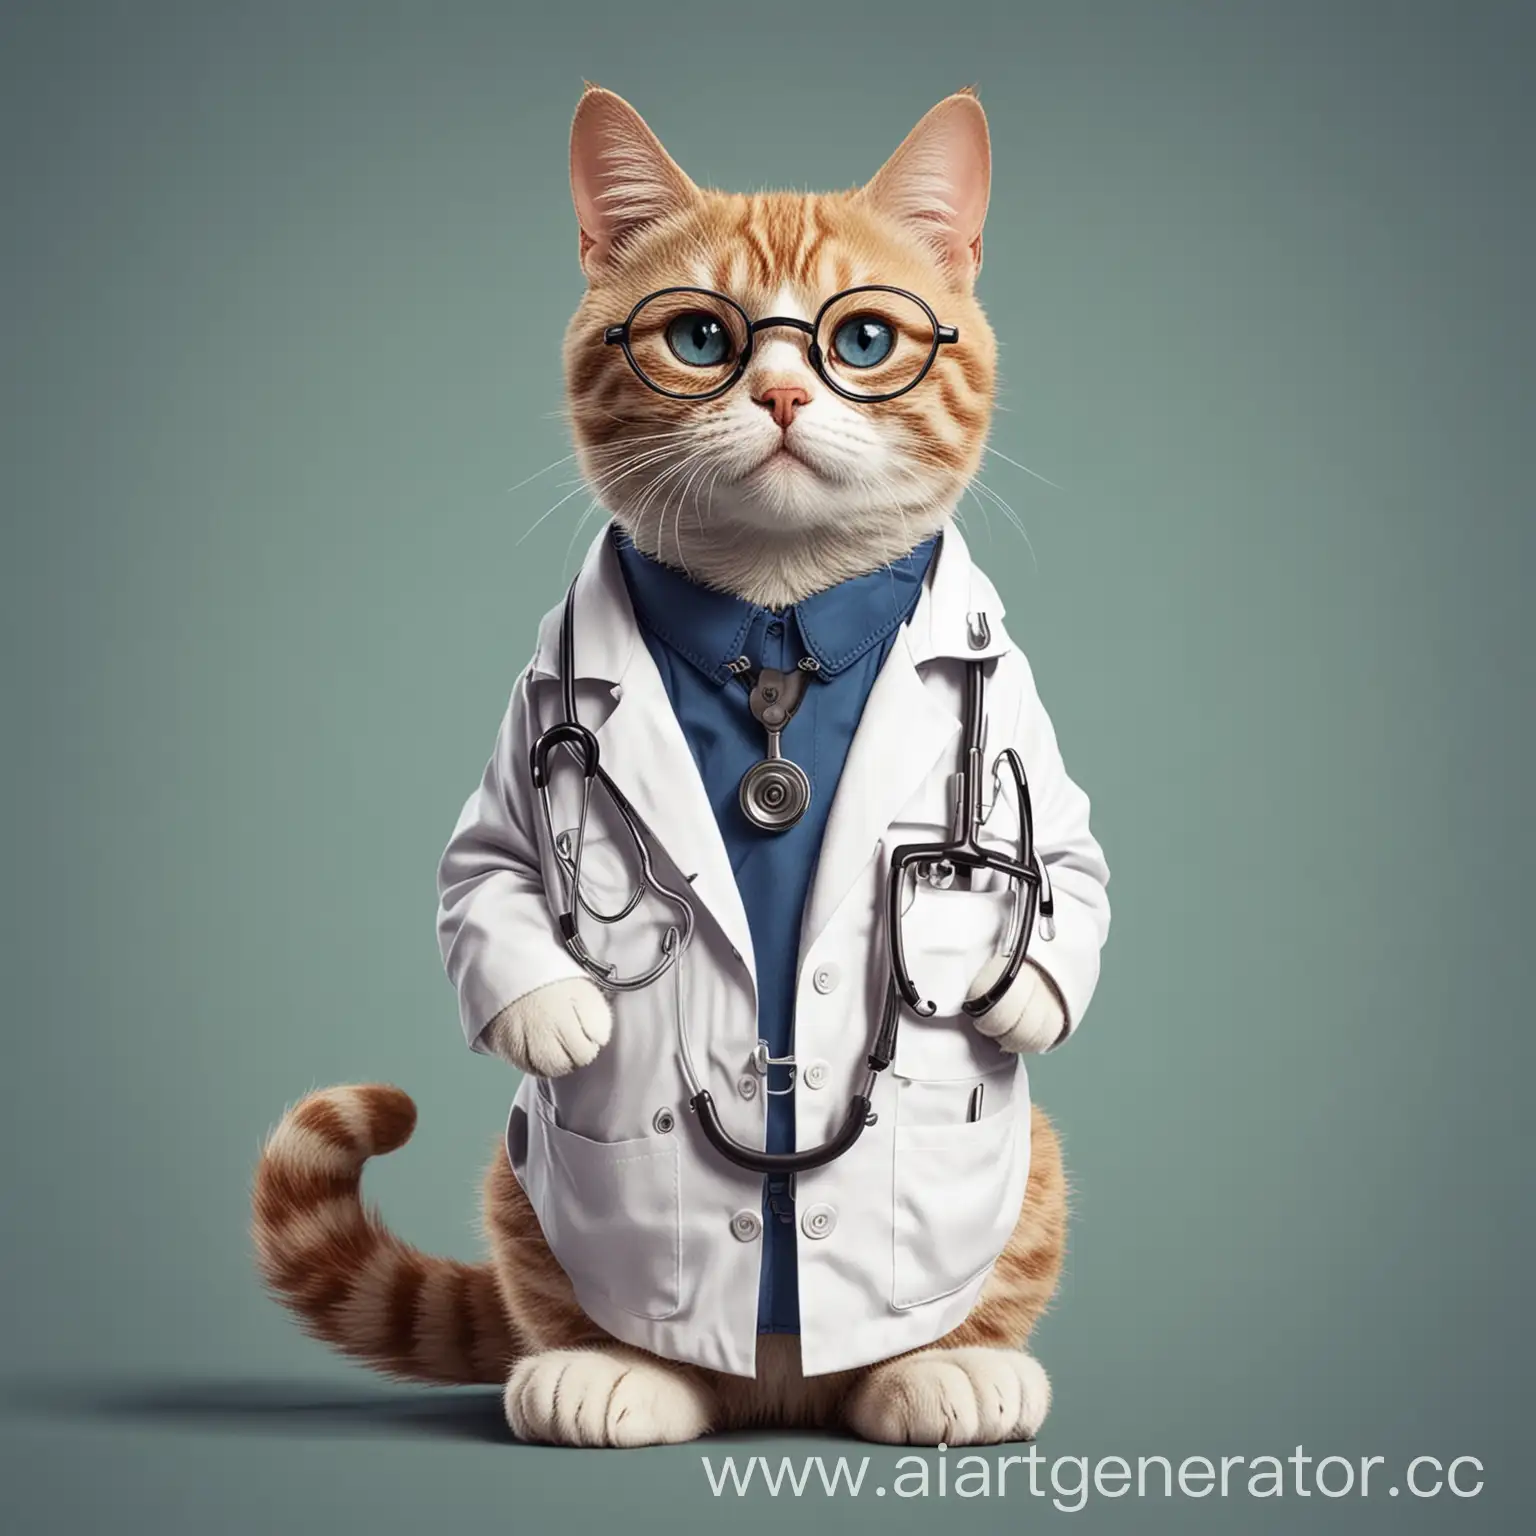 Cartoon-Cat-Pharmacist-Hanging-Stethoscope-and-Glasses